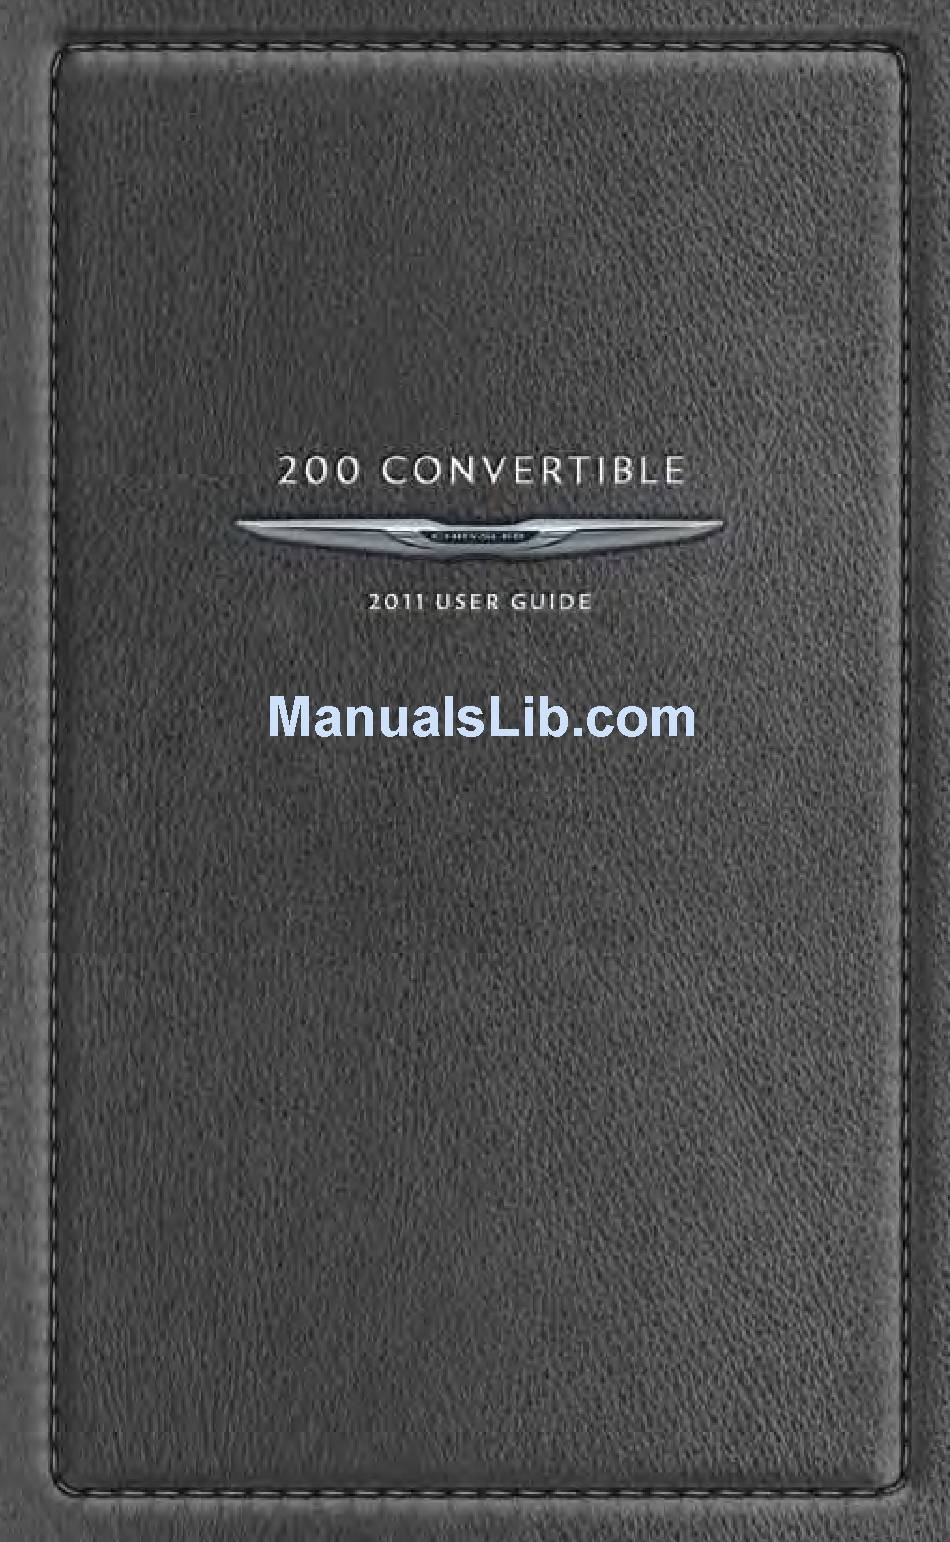 CHRYSLER 200 CONVERTIBLE USER MANUAL Pdf Download | ManualsLib 2011 Chrysler 200 Convertible Owners Manual